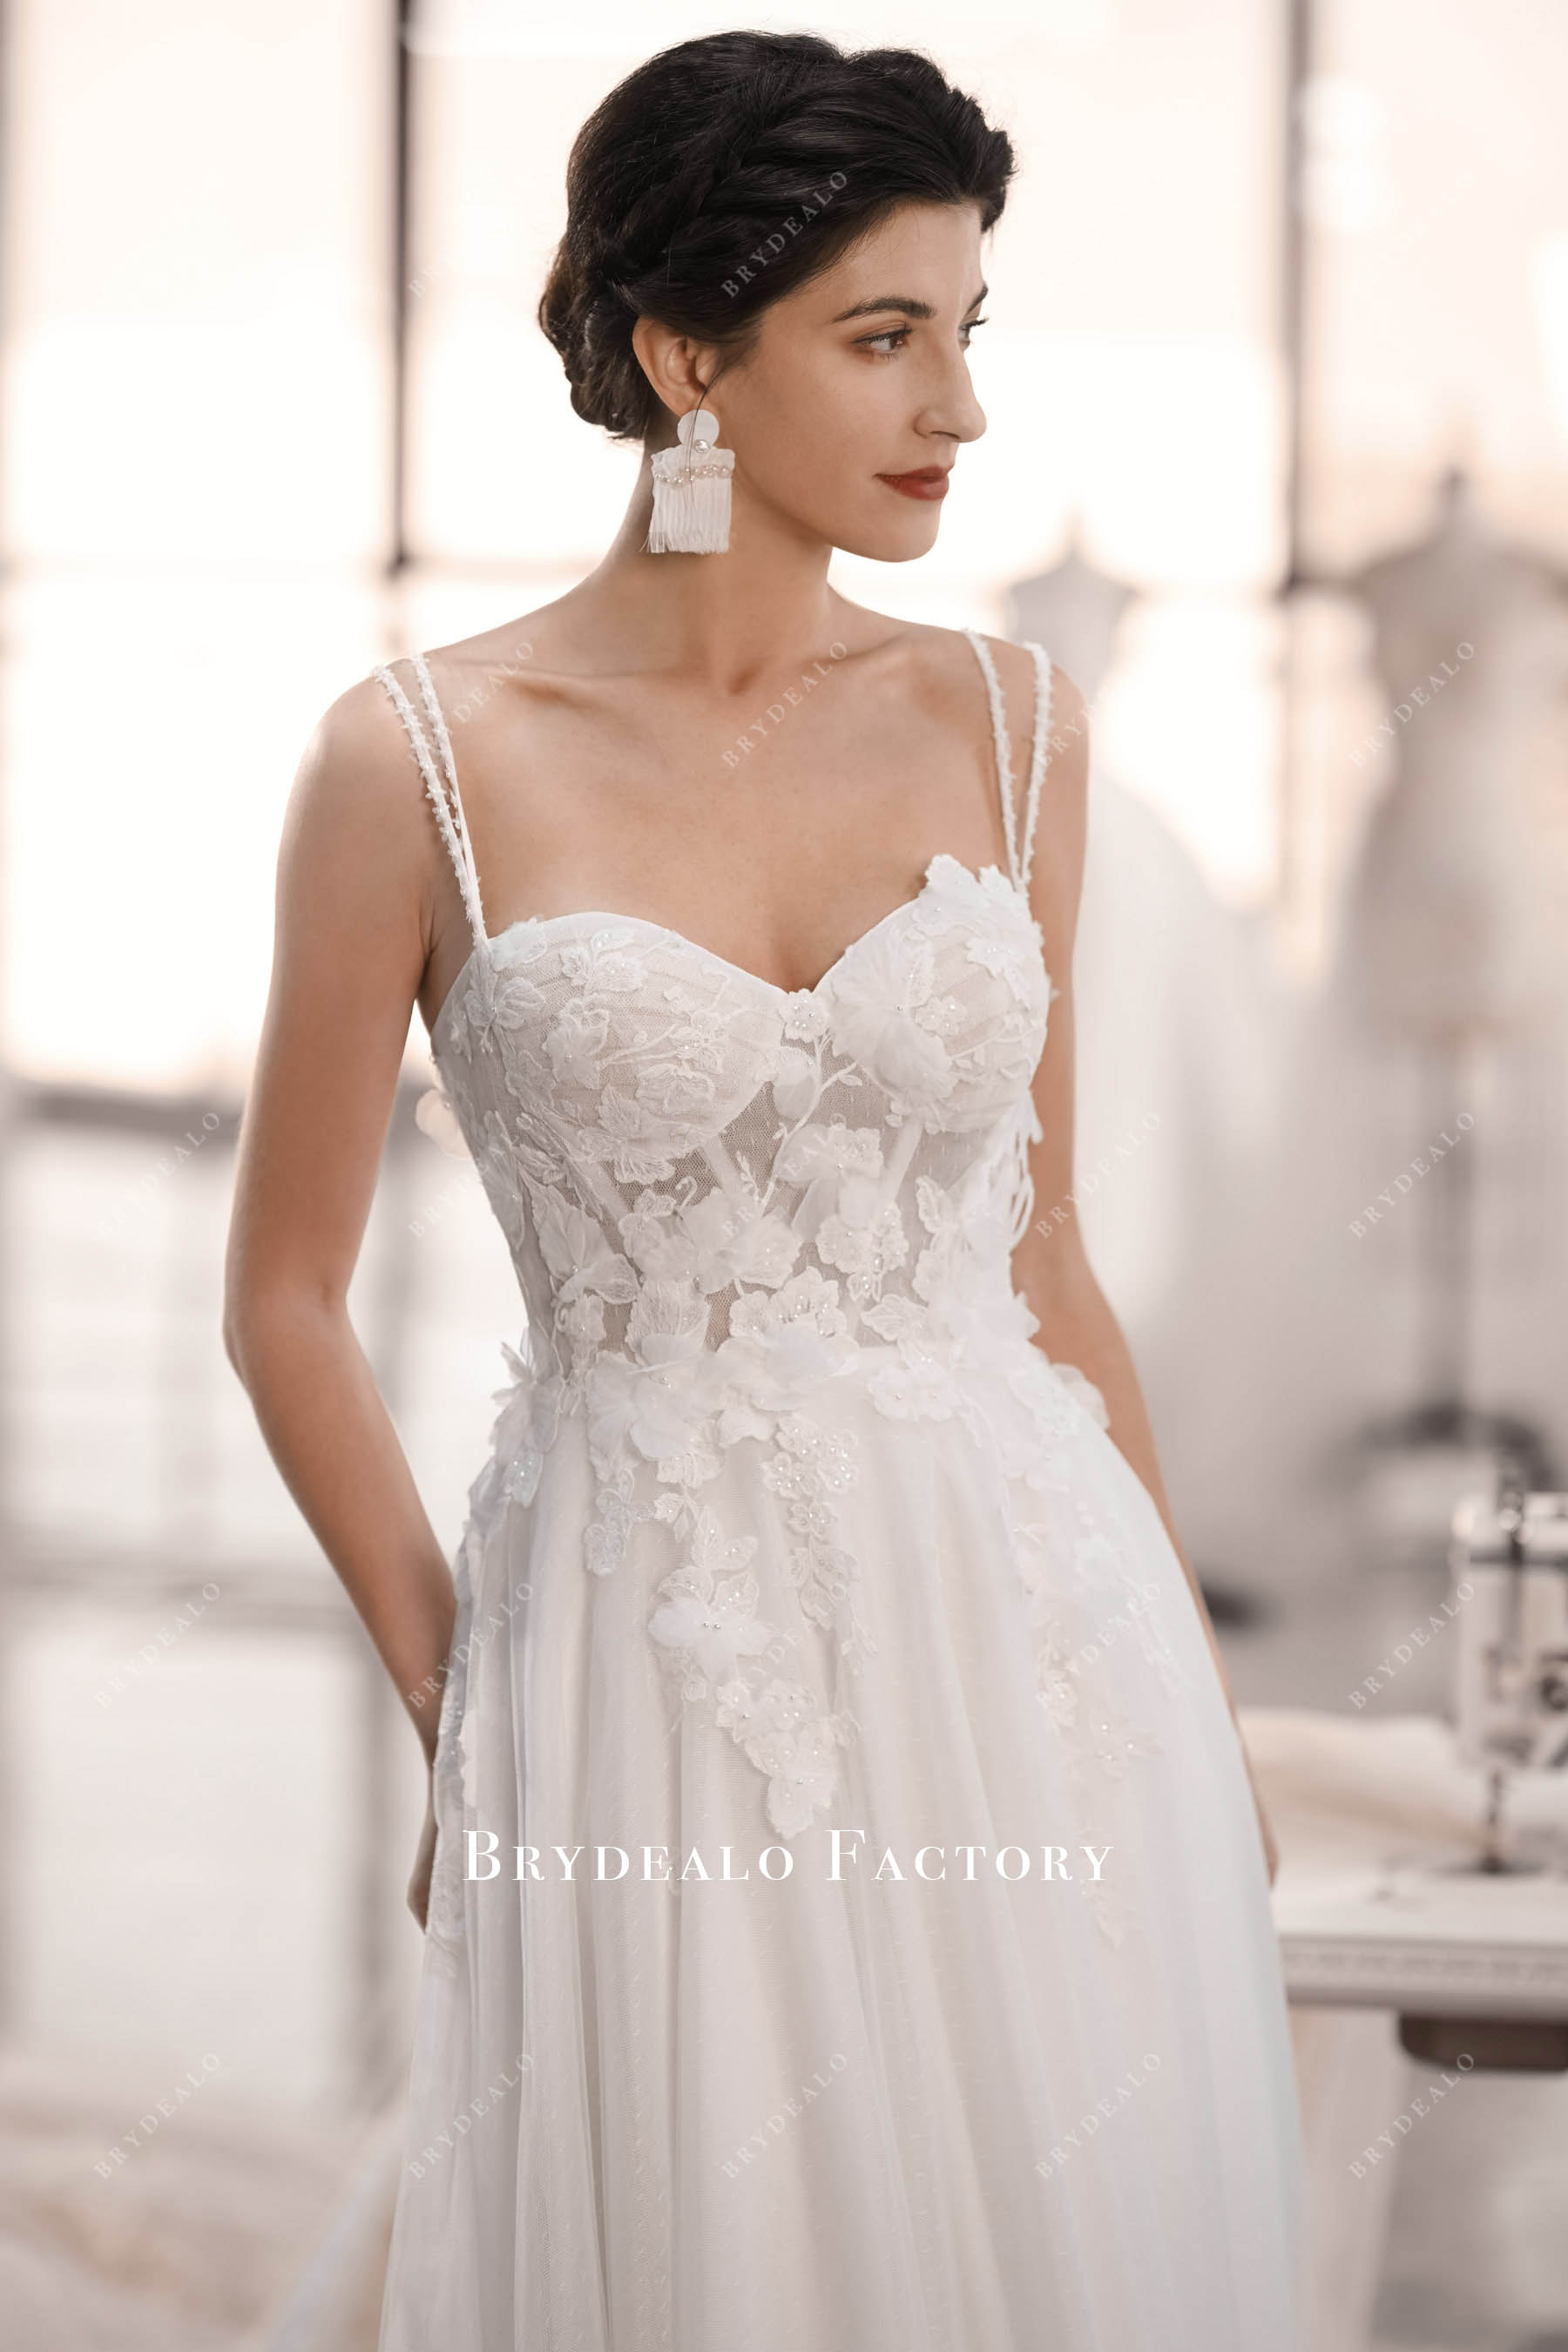 3D flower lace corset wedding dress